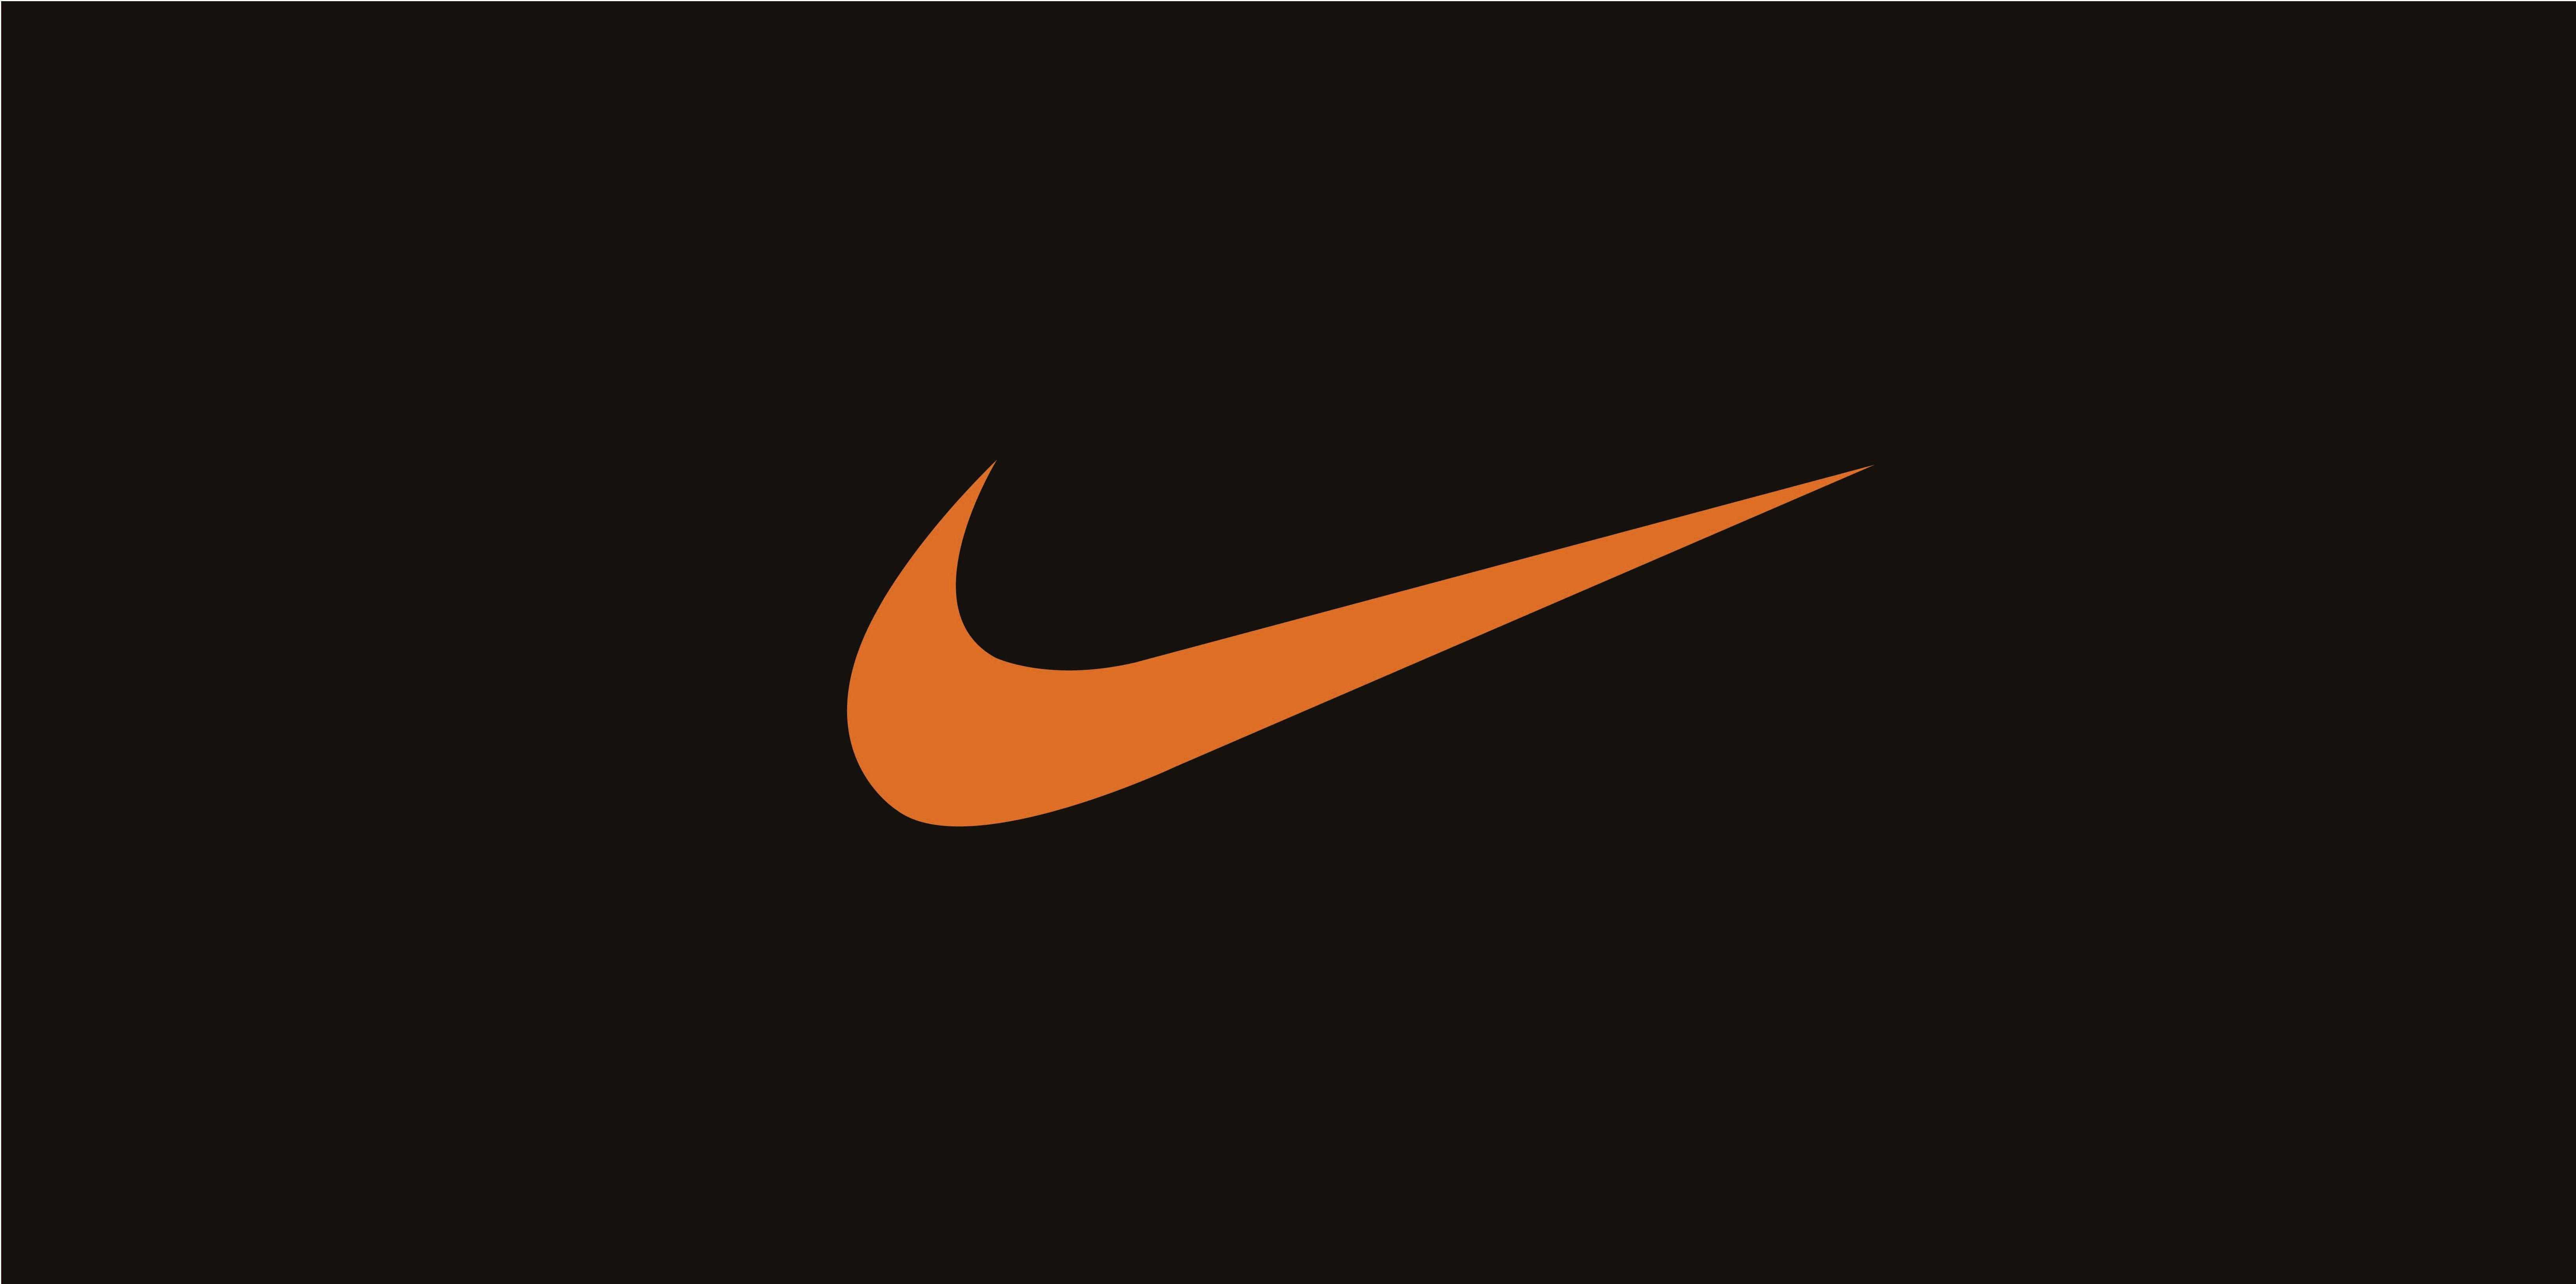 Black Nike Logo - Nike Logo Wallpapers HD free download | PixelsTalk.Net